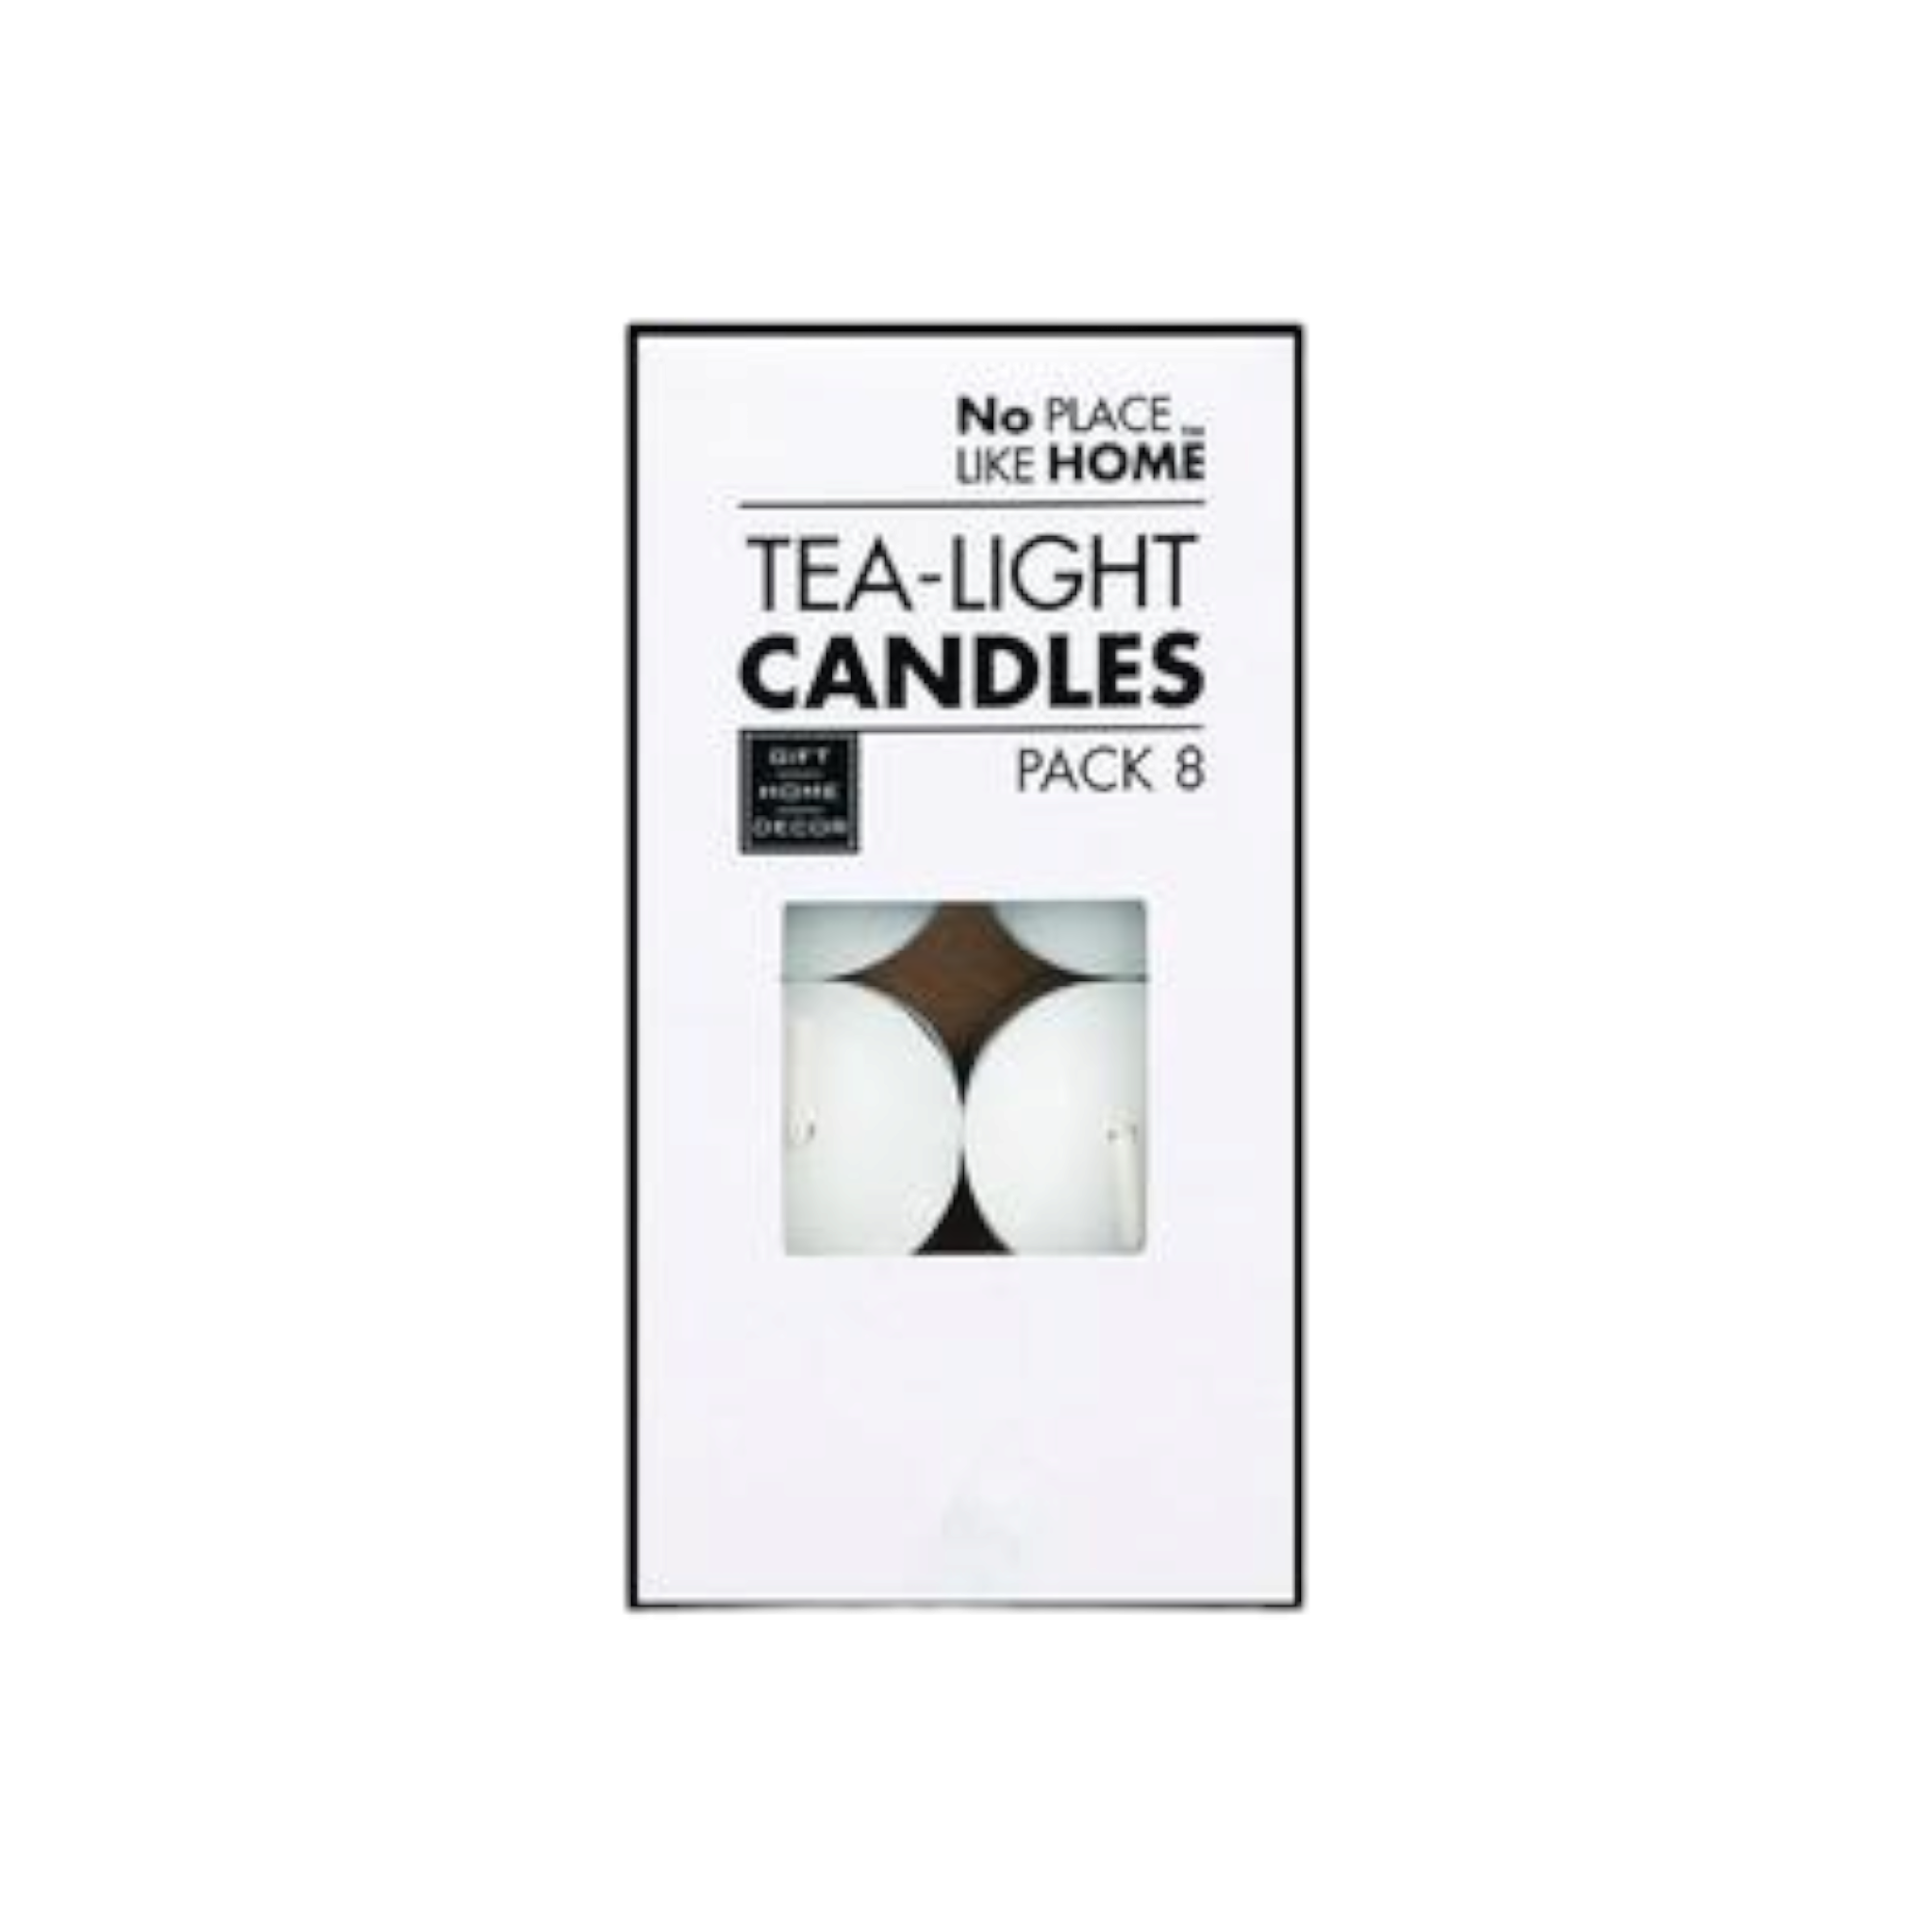 Tealight Candles White 3.5cm 8pcs